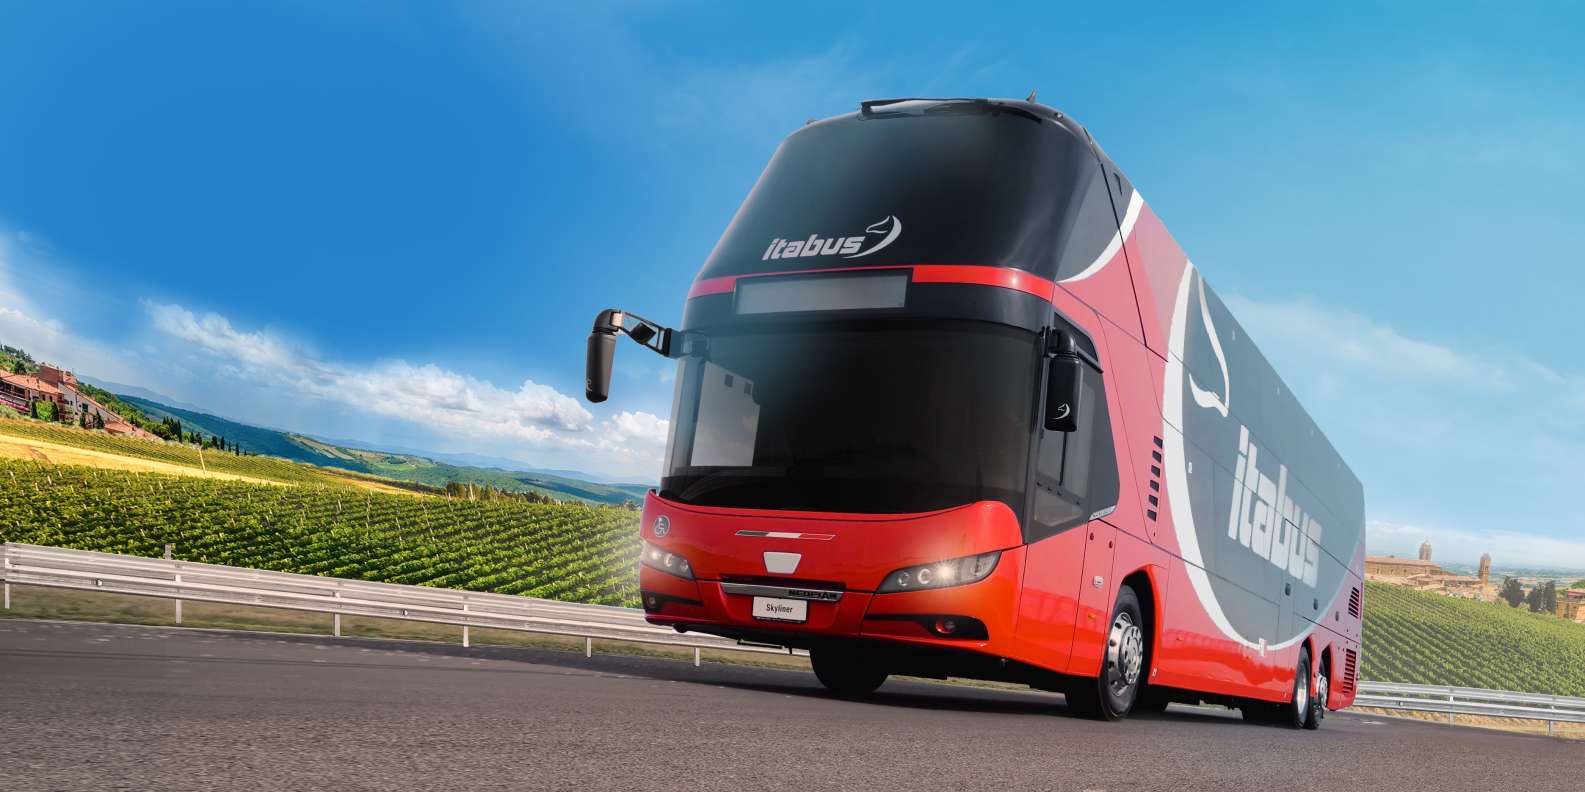 New Double Decker Bus Driving in Dubai - Bus Simulator 2023 NEW UPDATE 